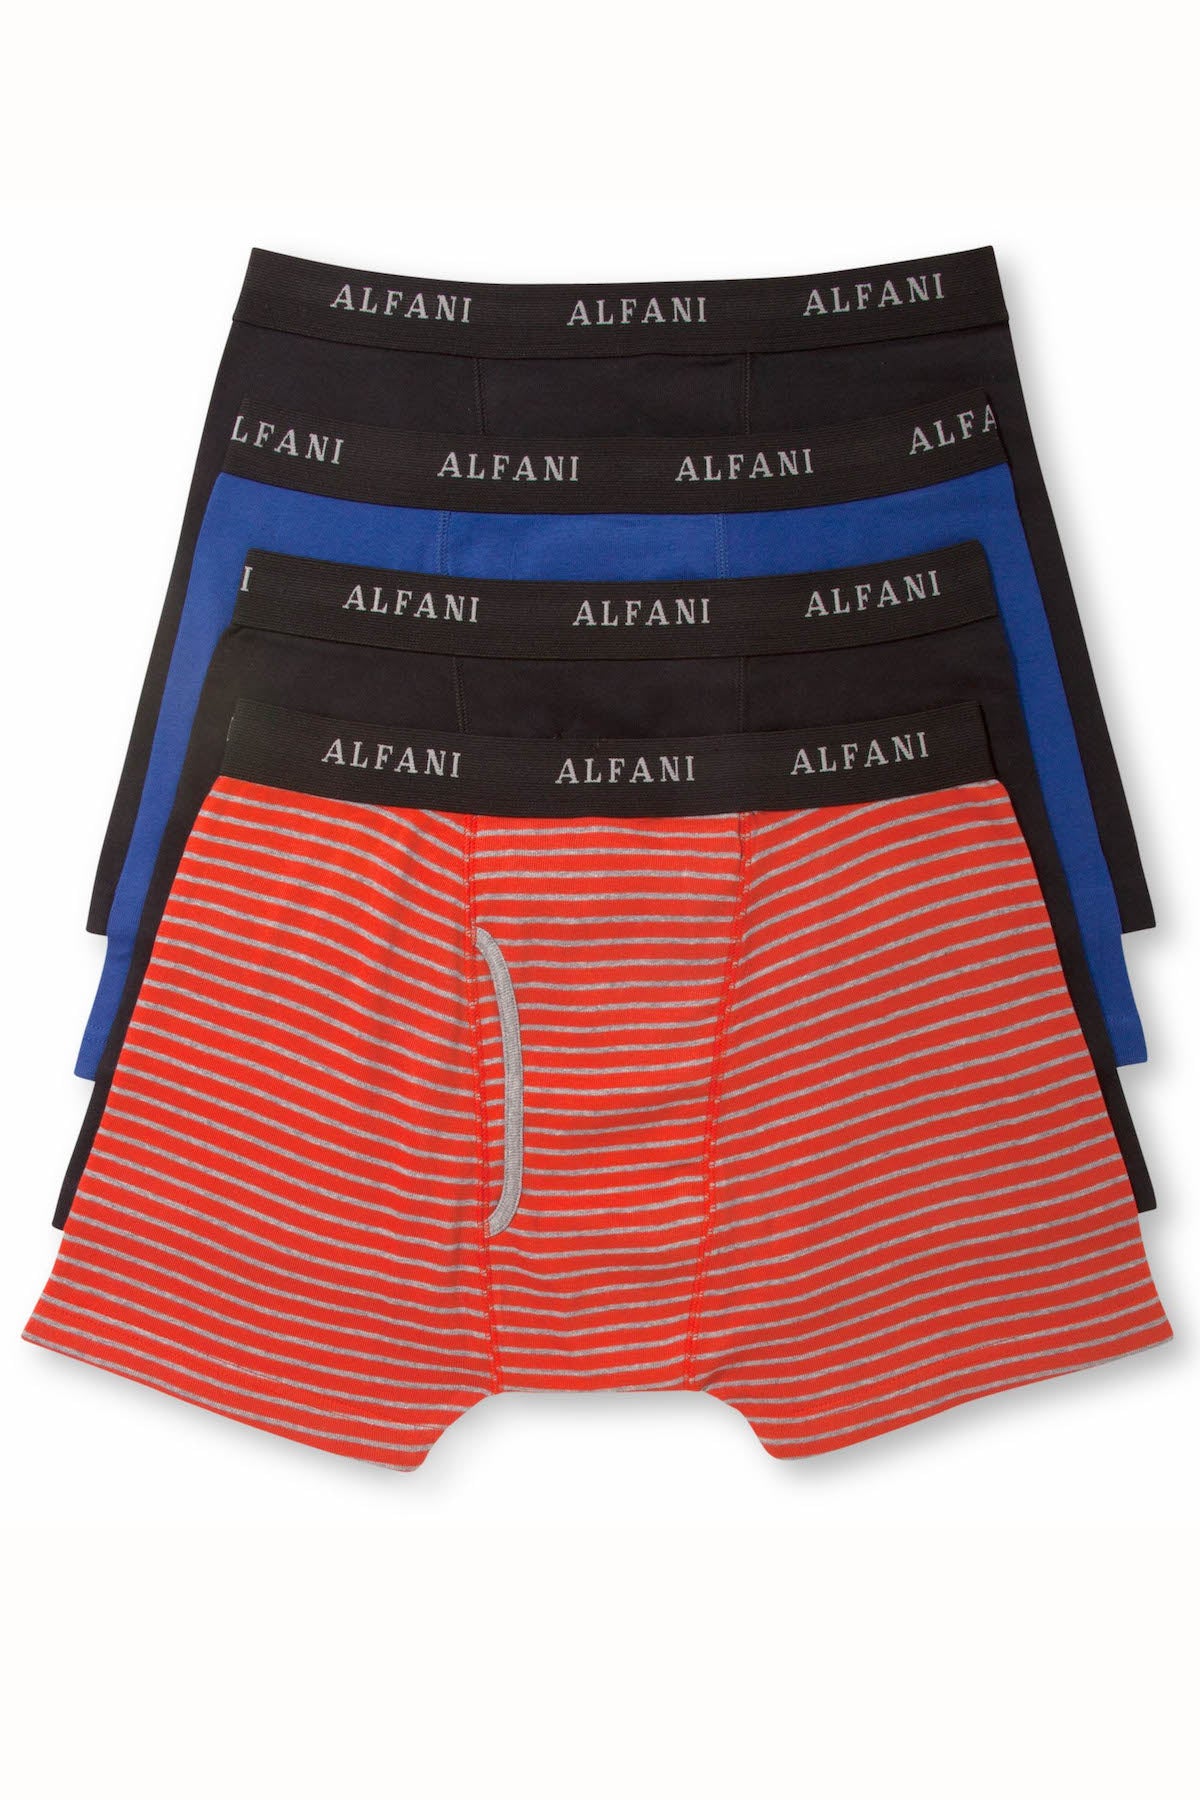 Alfani Feeder-Stripe Boxer Brief 4-Pack